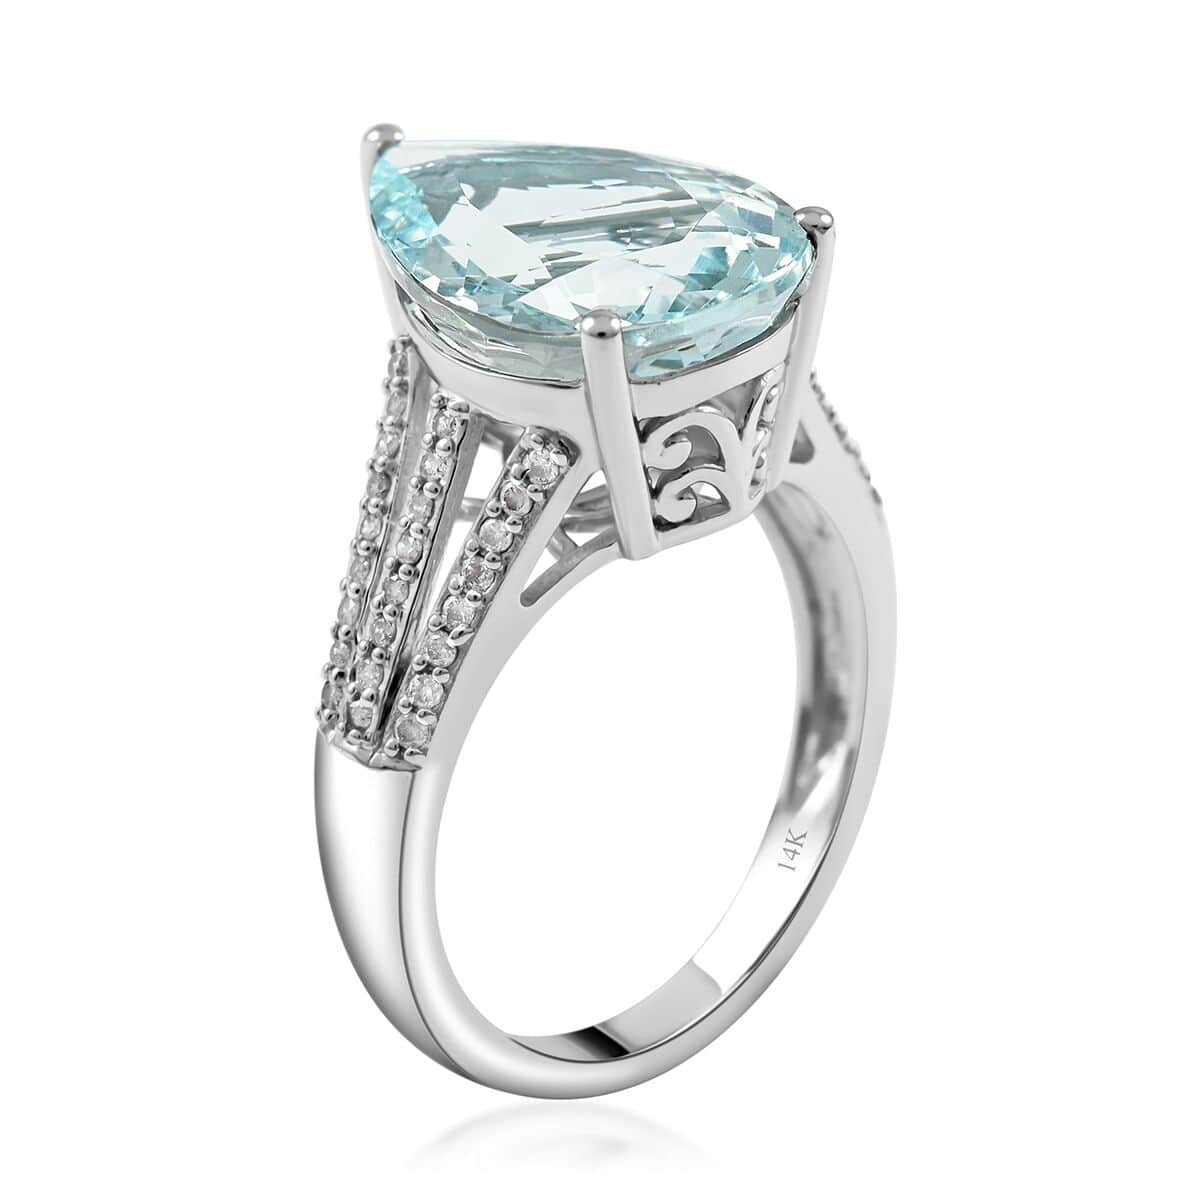 Luxoro 14K White Gold Premium Mangoro Aquamarine and G-H I2 Diamond Ring (Size 10.0) 4.50 ctw image number 3